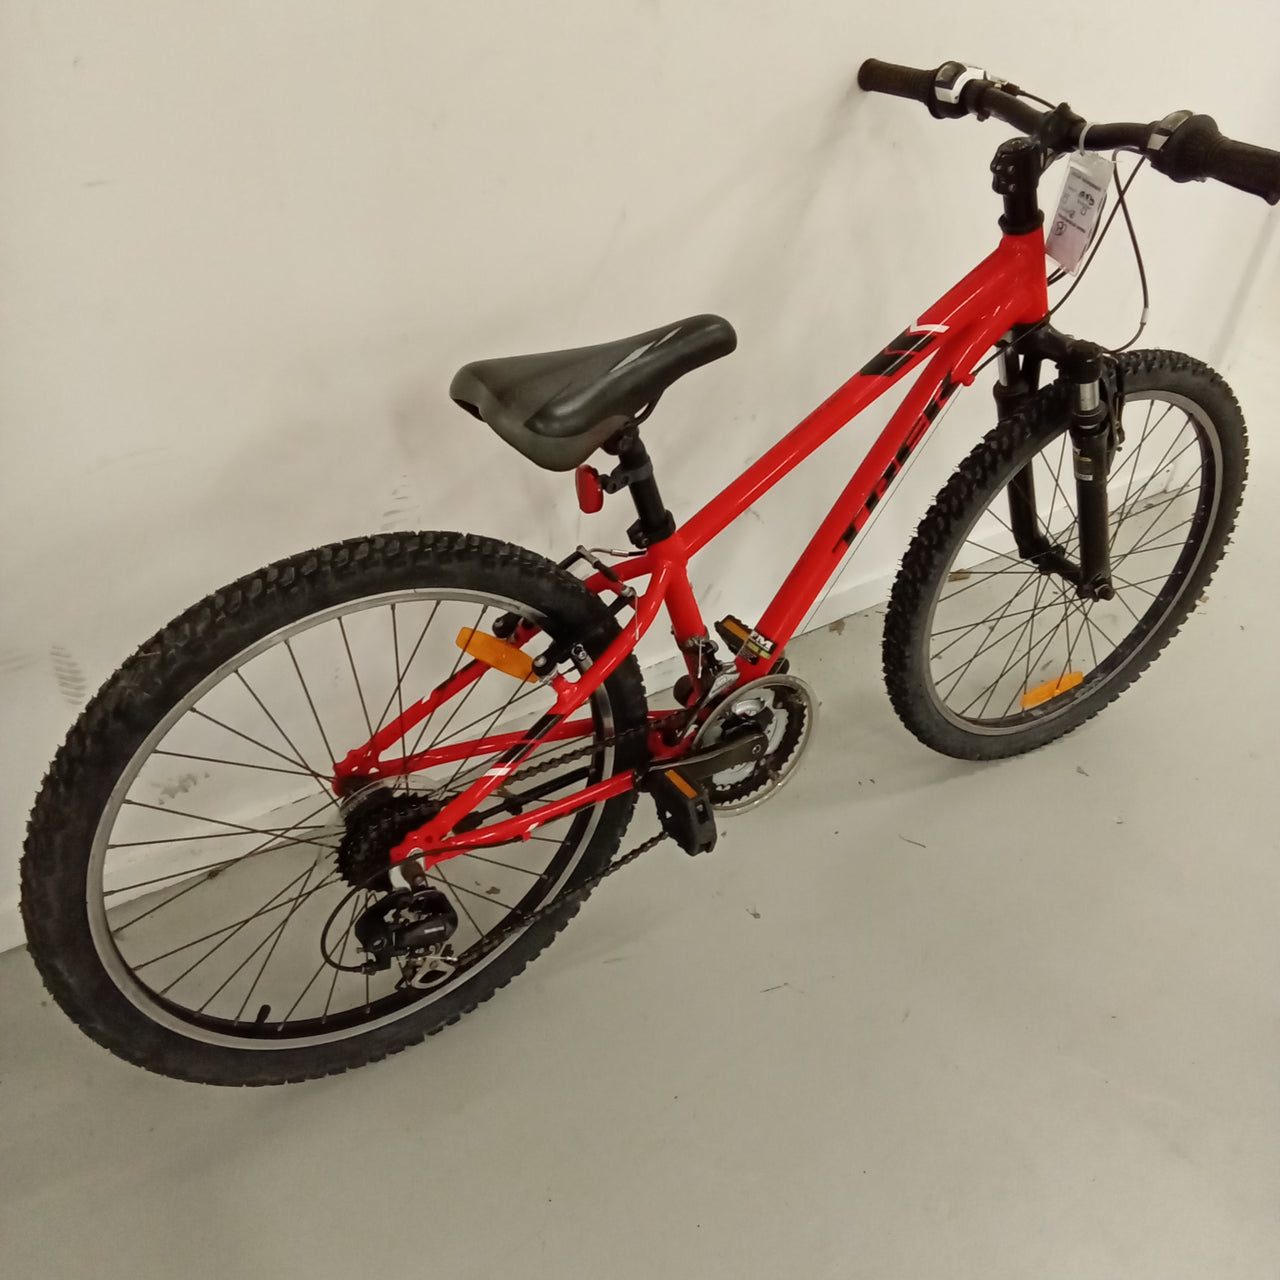 916 - 24" Red, Mountain Bike,
Kids, Bike